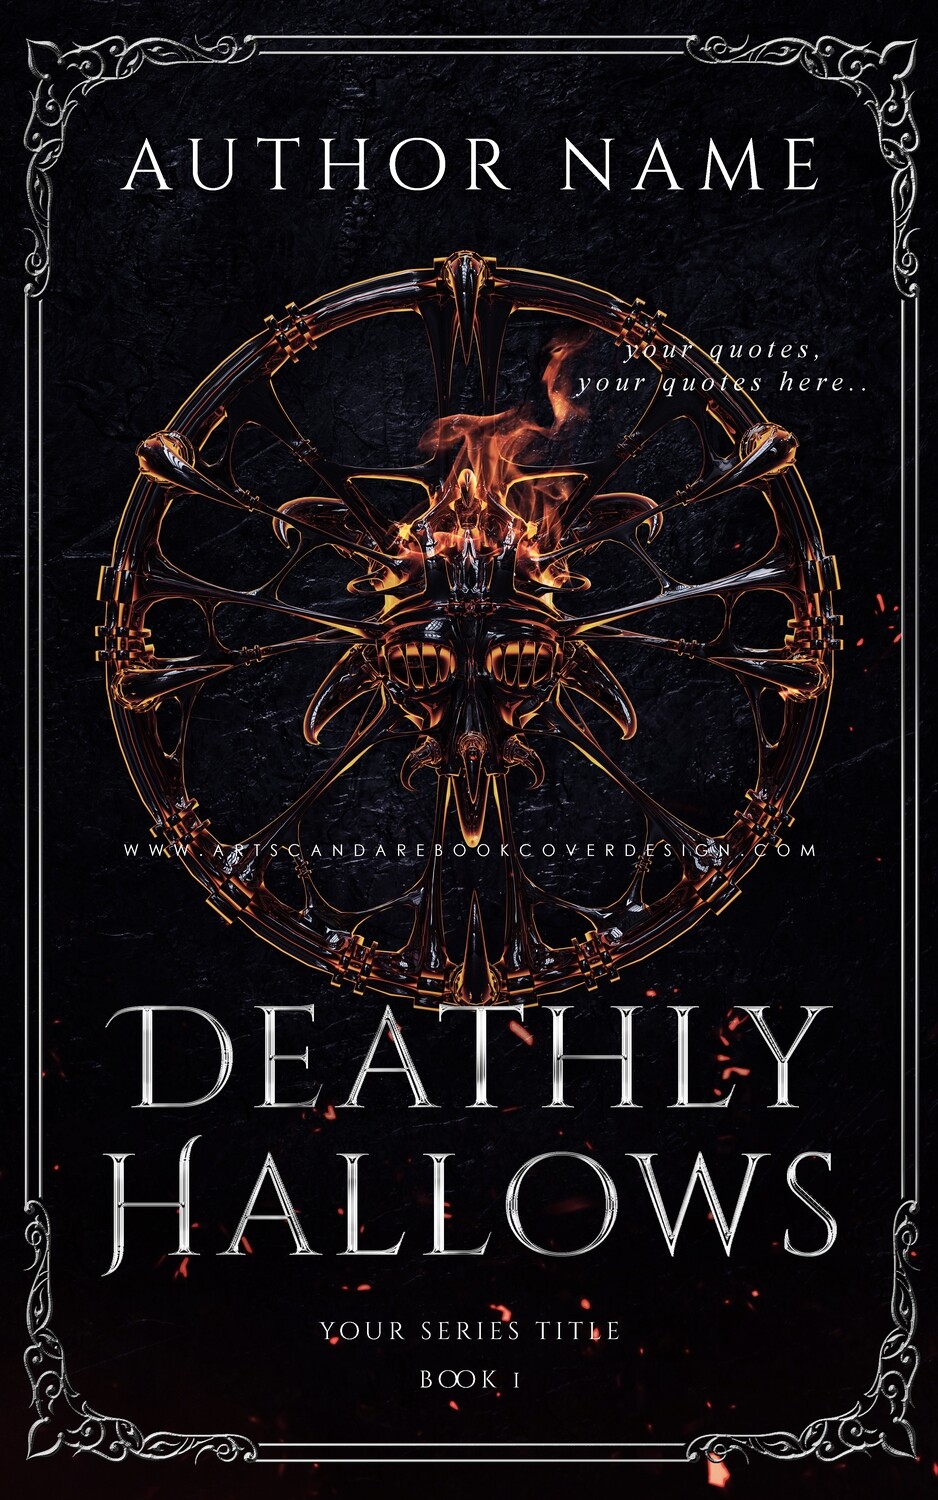 Ebook: Deathly Hallows DUOLOGY